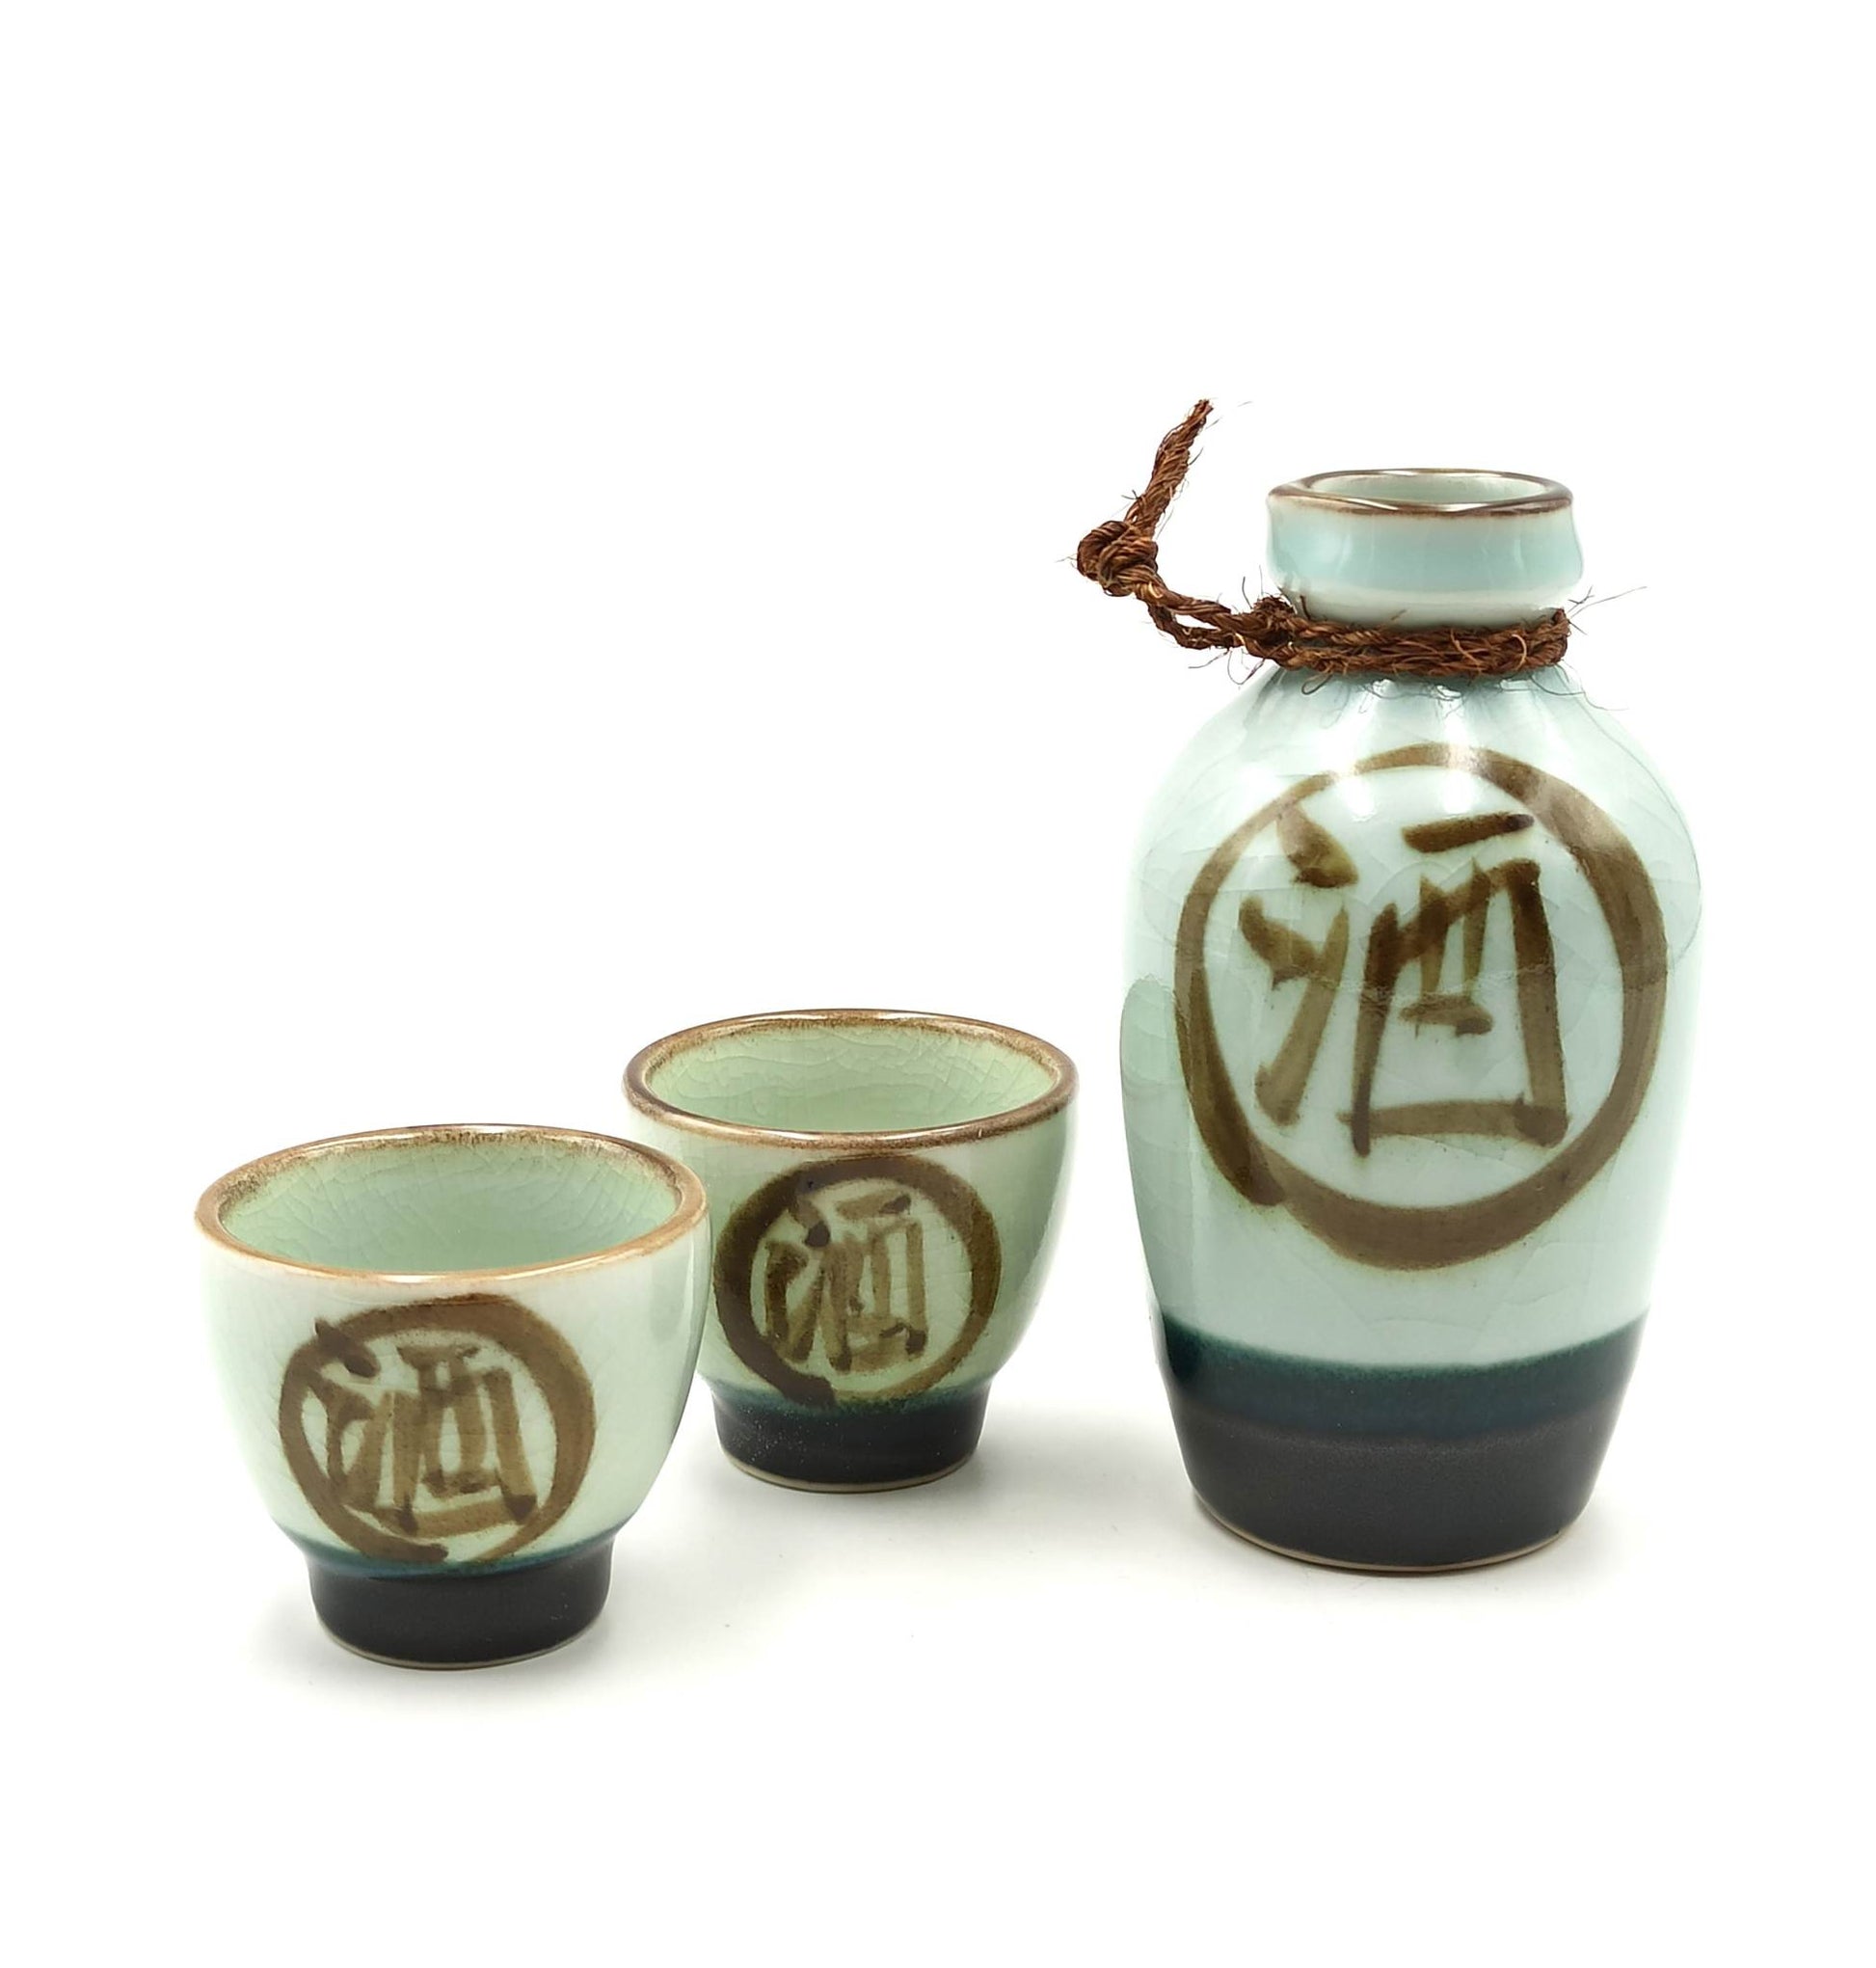 FFVWVGGPAA Sake Set Sake Set di 5 Pezzi Fiori di Prugna Dipinti a Mano in  Stile Giapponese Artigianato Tradizionale in Porcellana retrò 1022